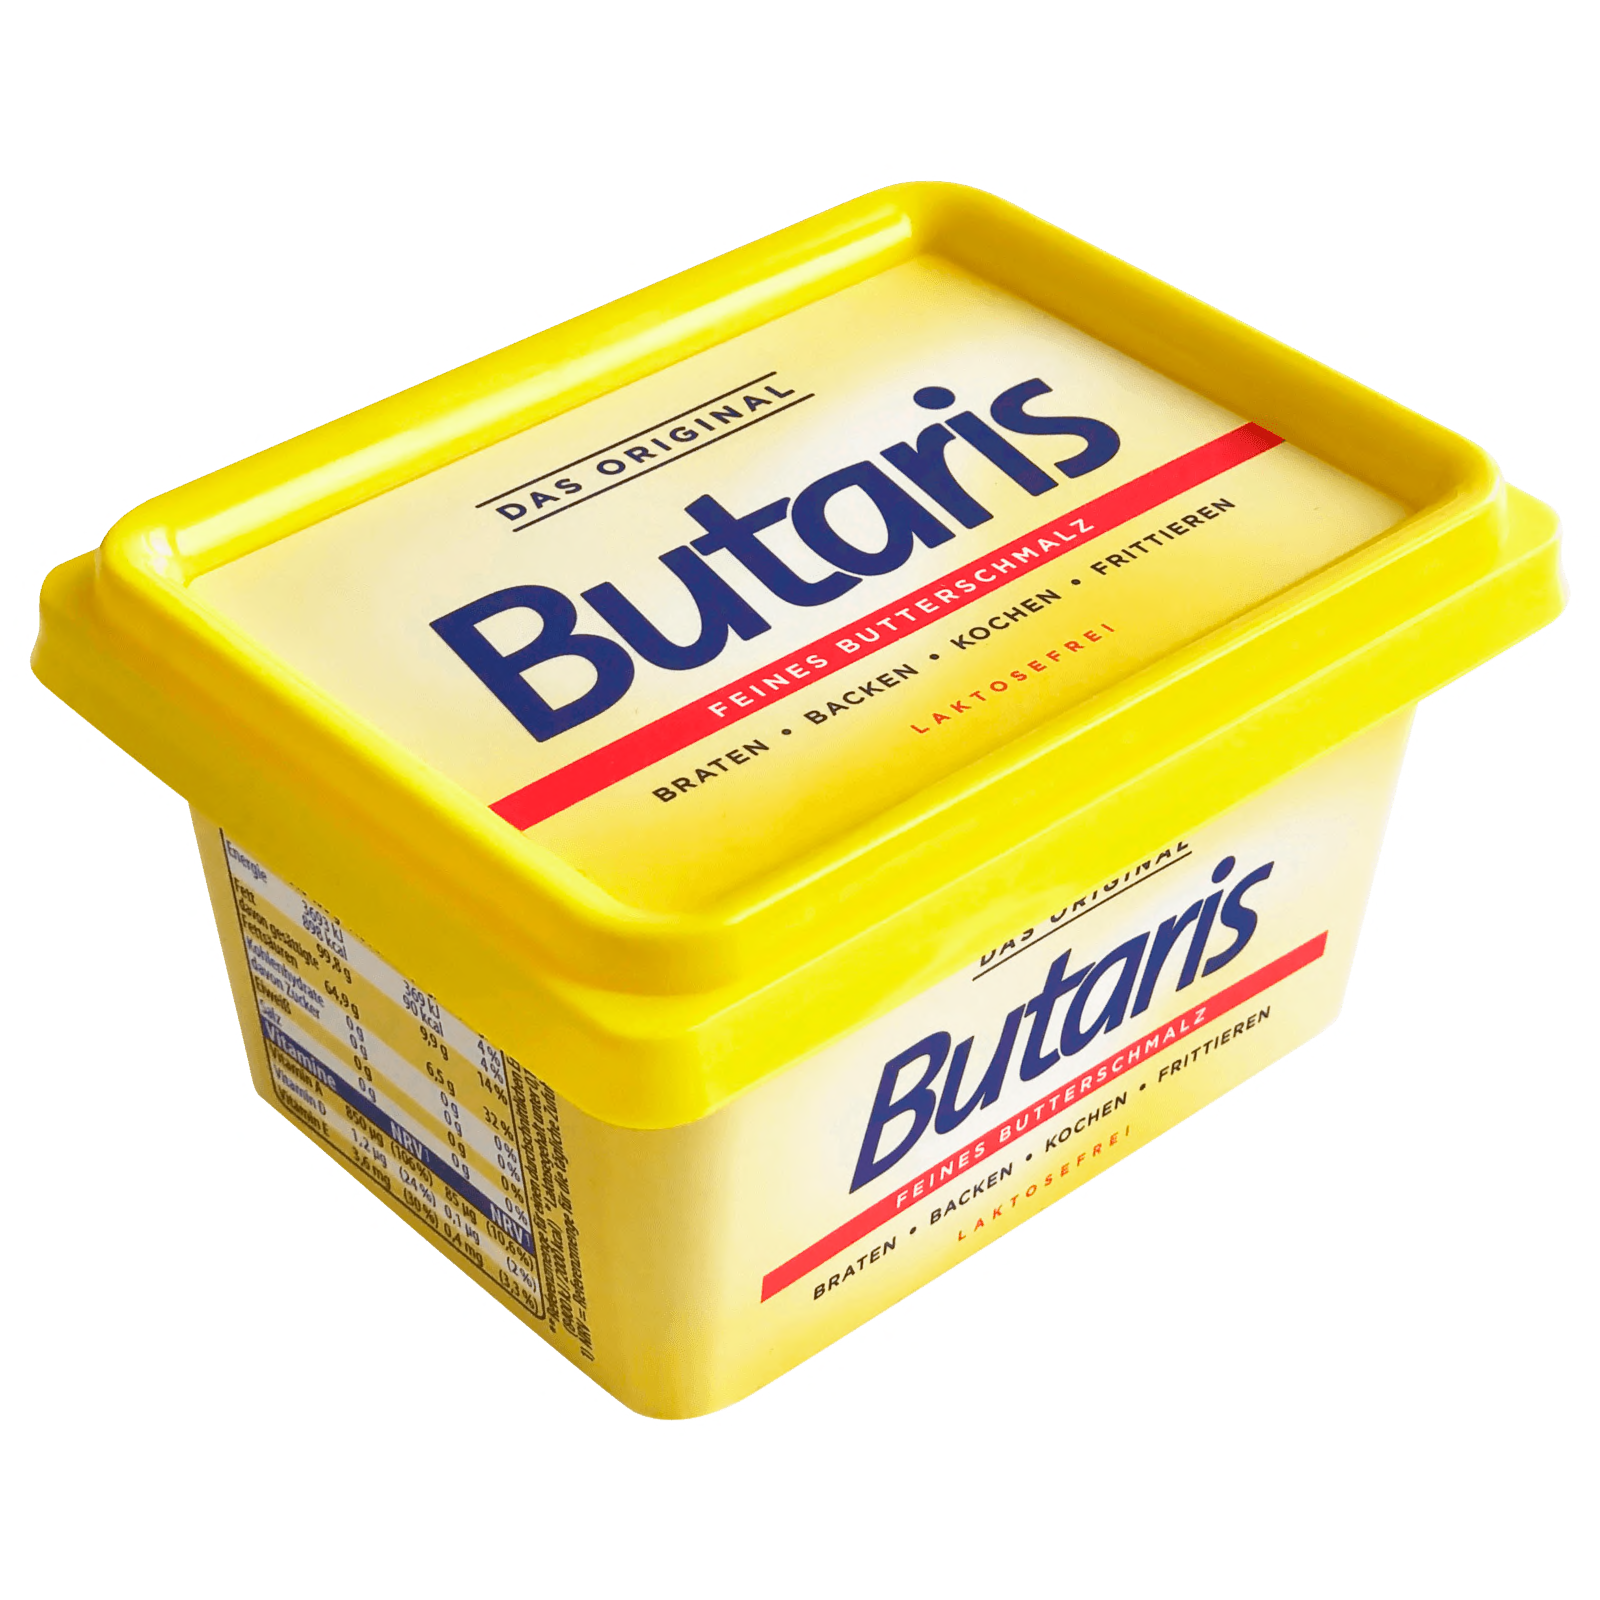 Butaris Butterschmalz 250g Bei Rewe Online Bestellen